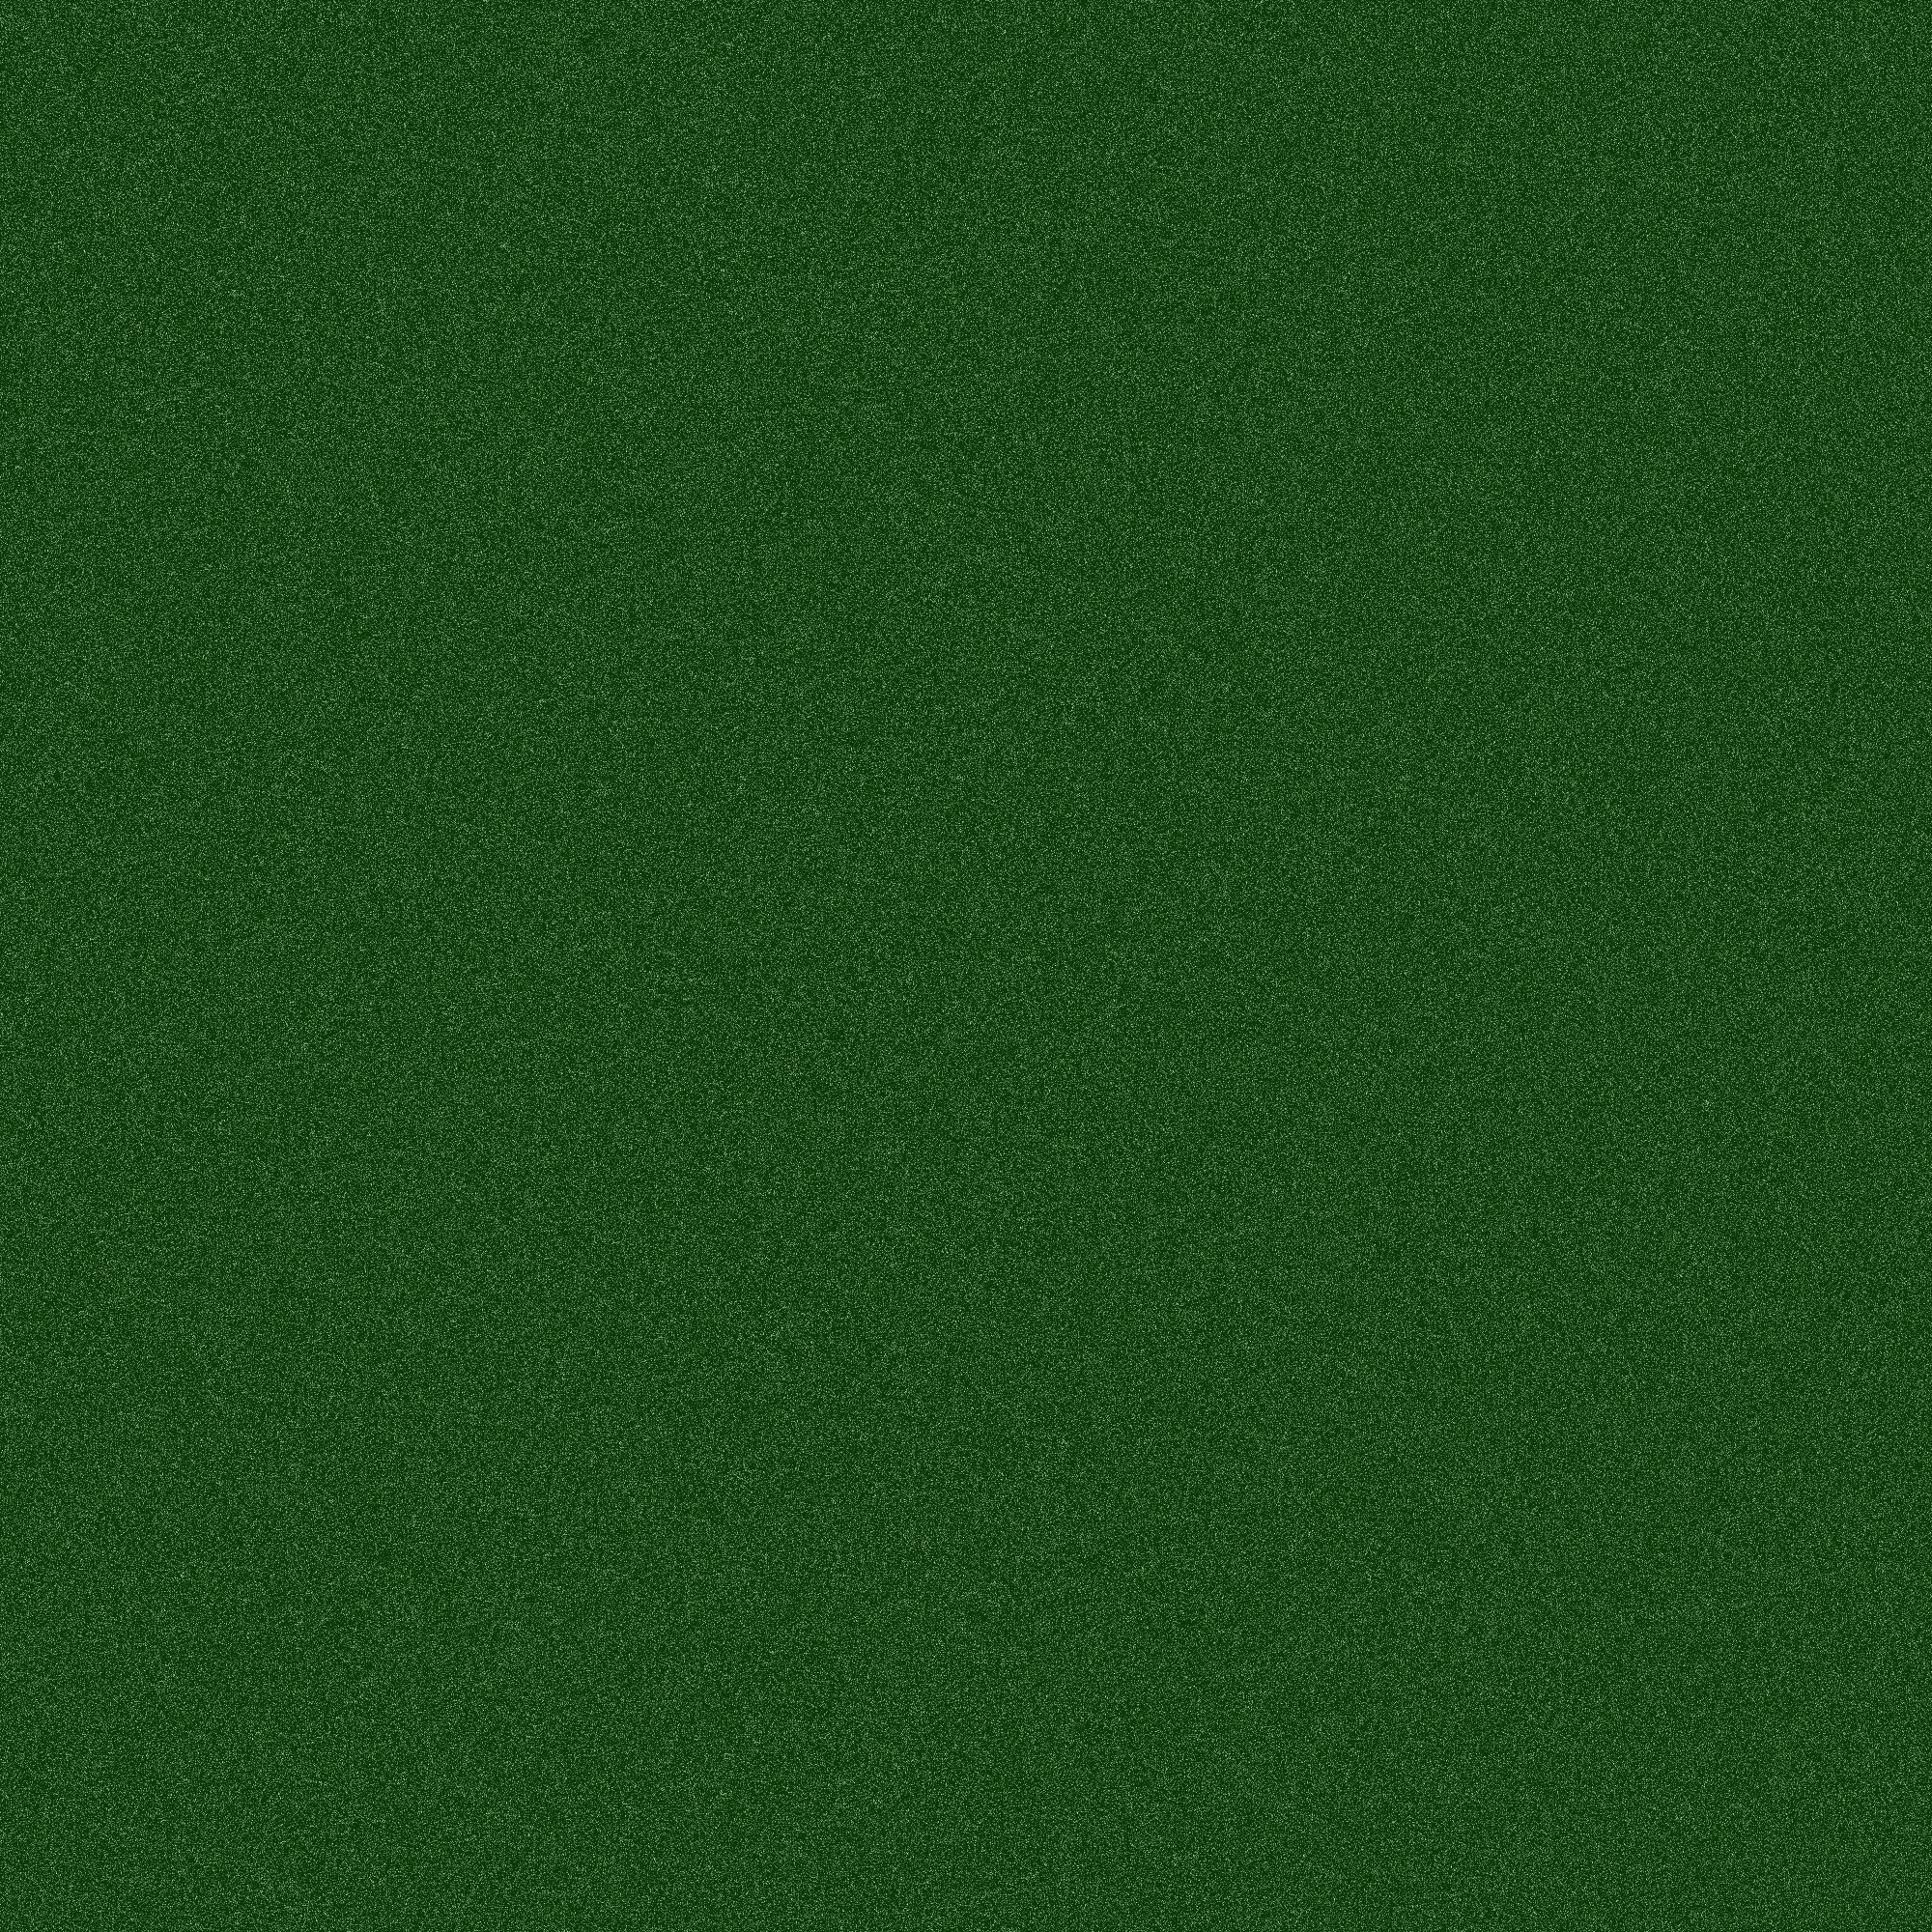 Dark Green Noise background texture. PNG:Public Domain. ICON PARK